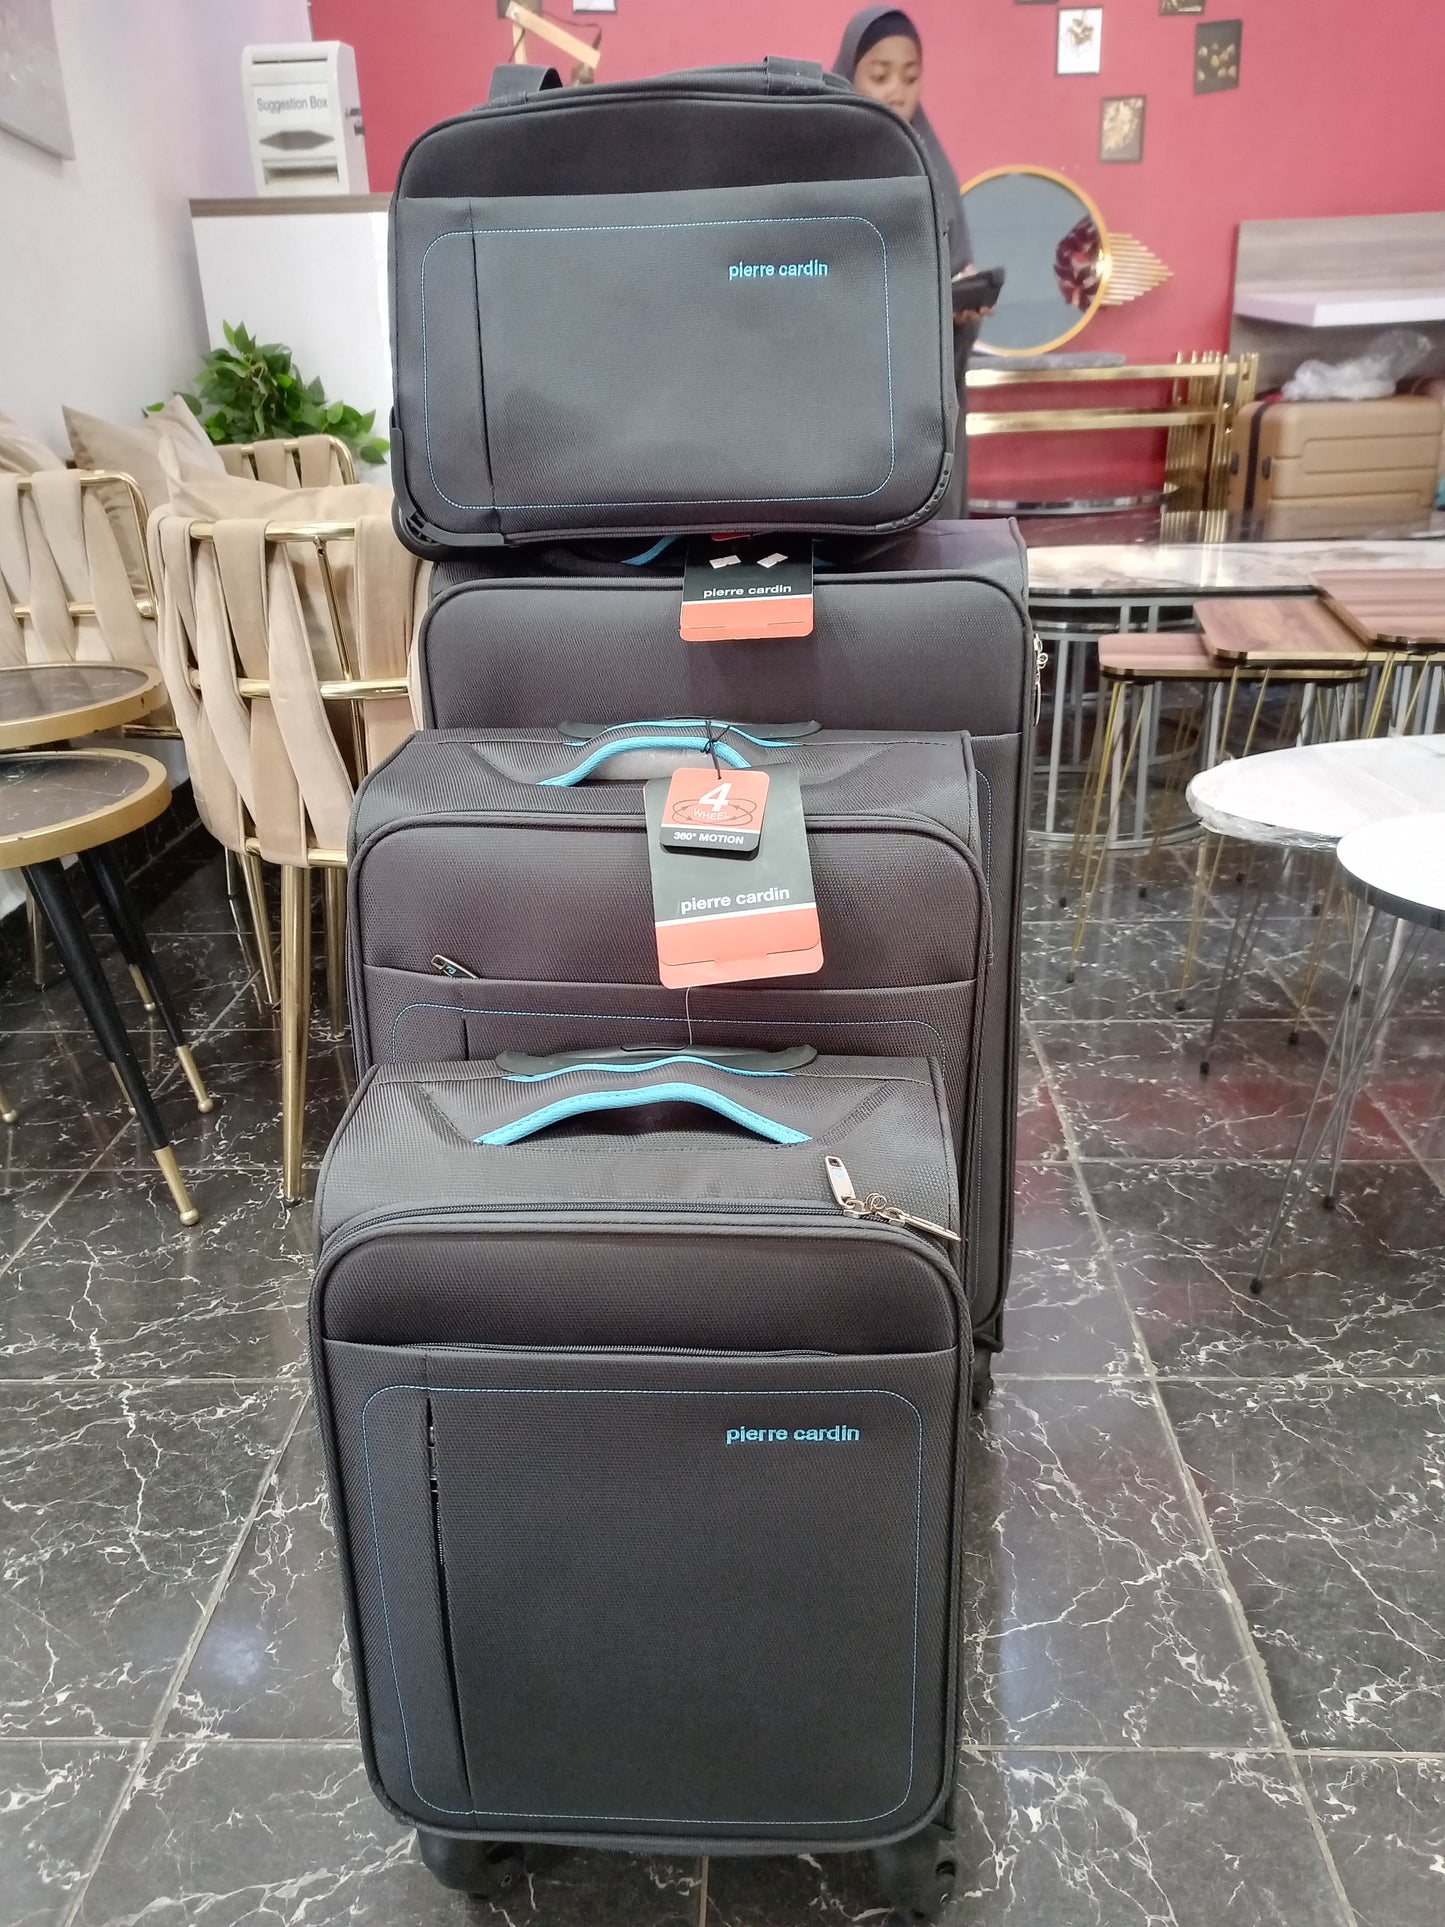 PIERRE CARDIN Luggage Set of 3